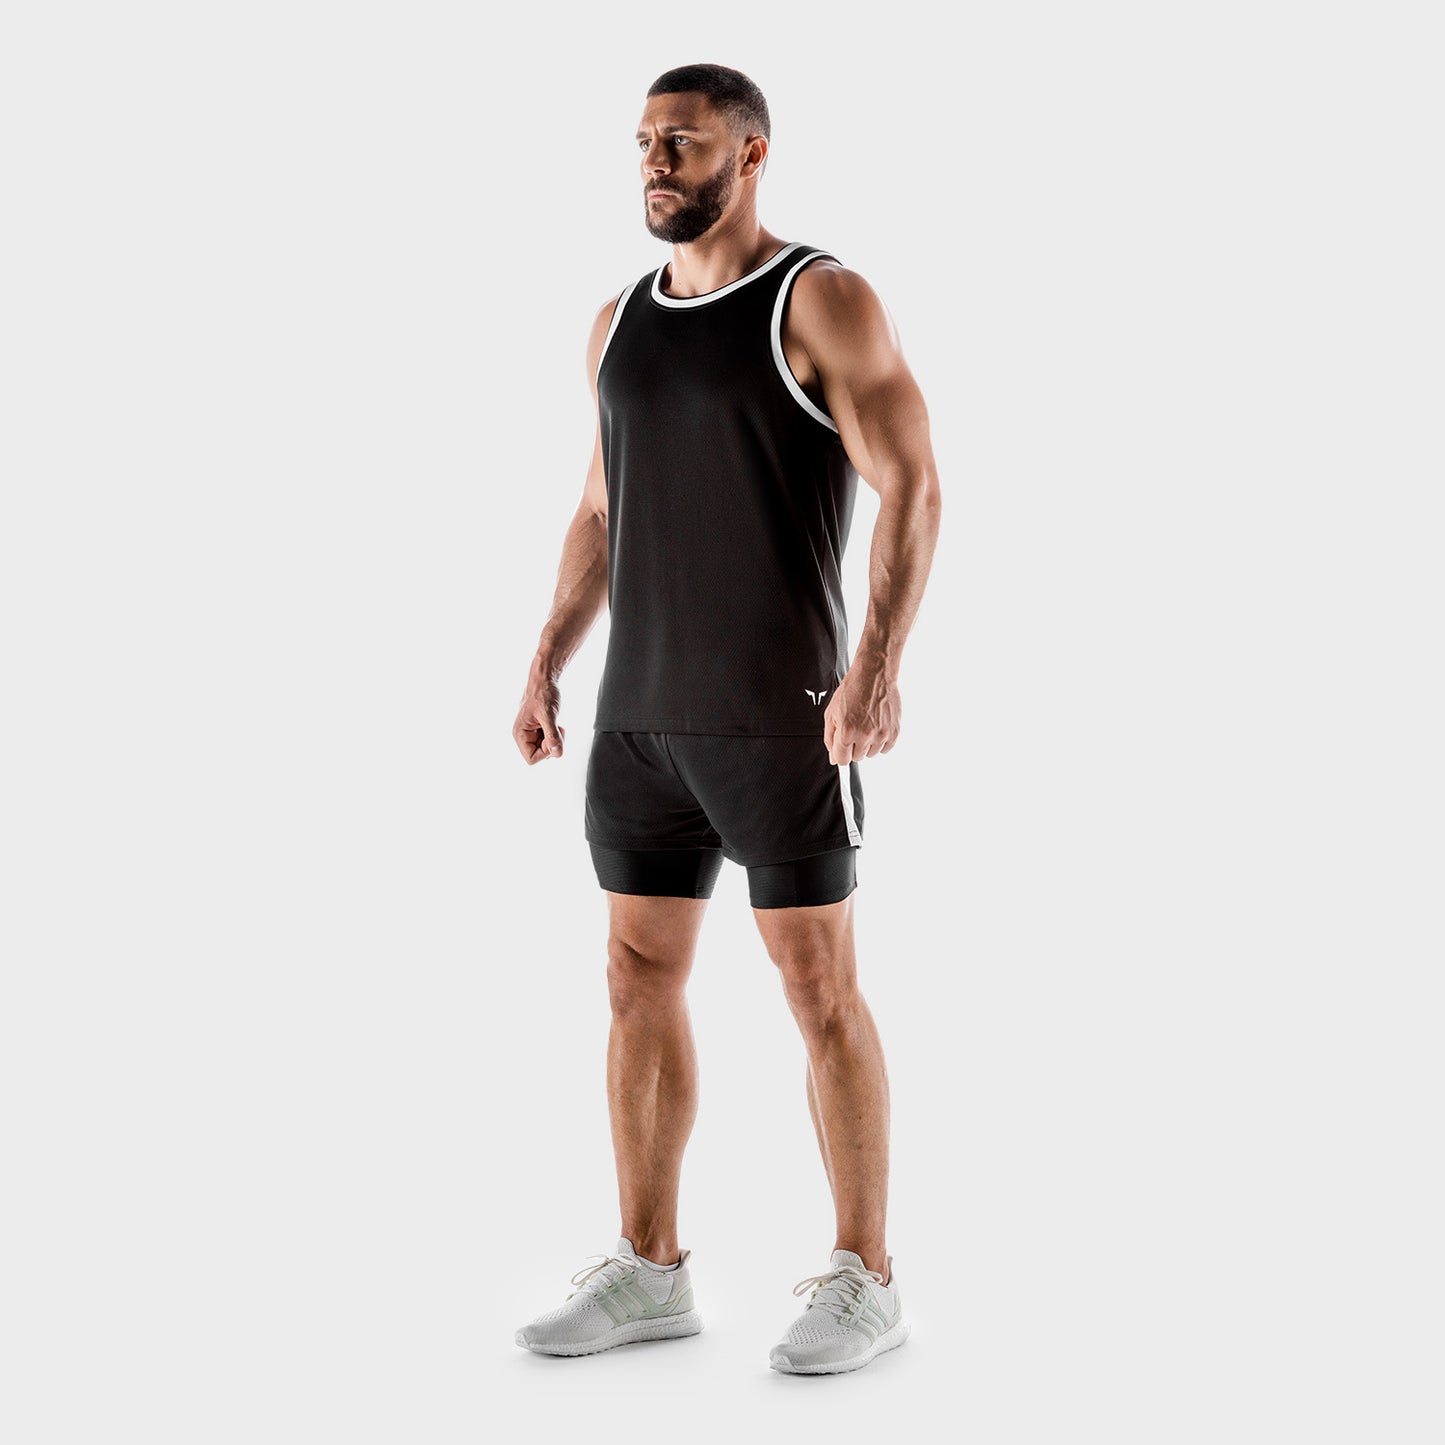 squatwolf-gym-wear-hybrid-2-0-tank-black-workout-tank-tops-for-men